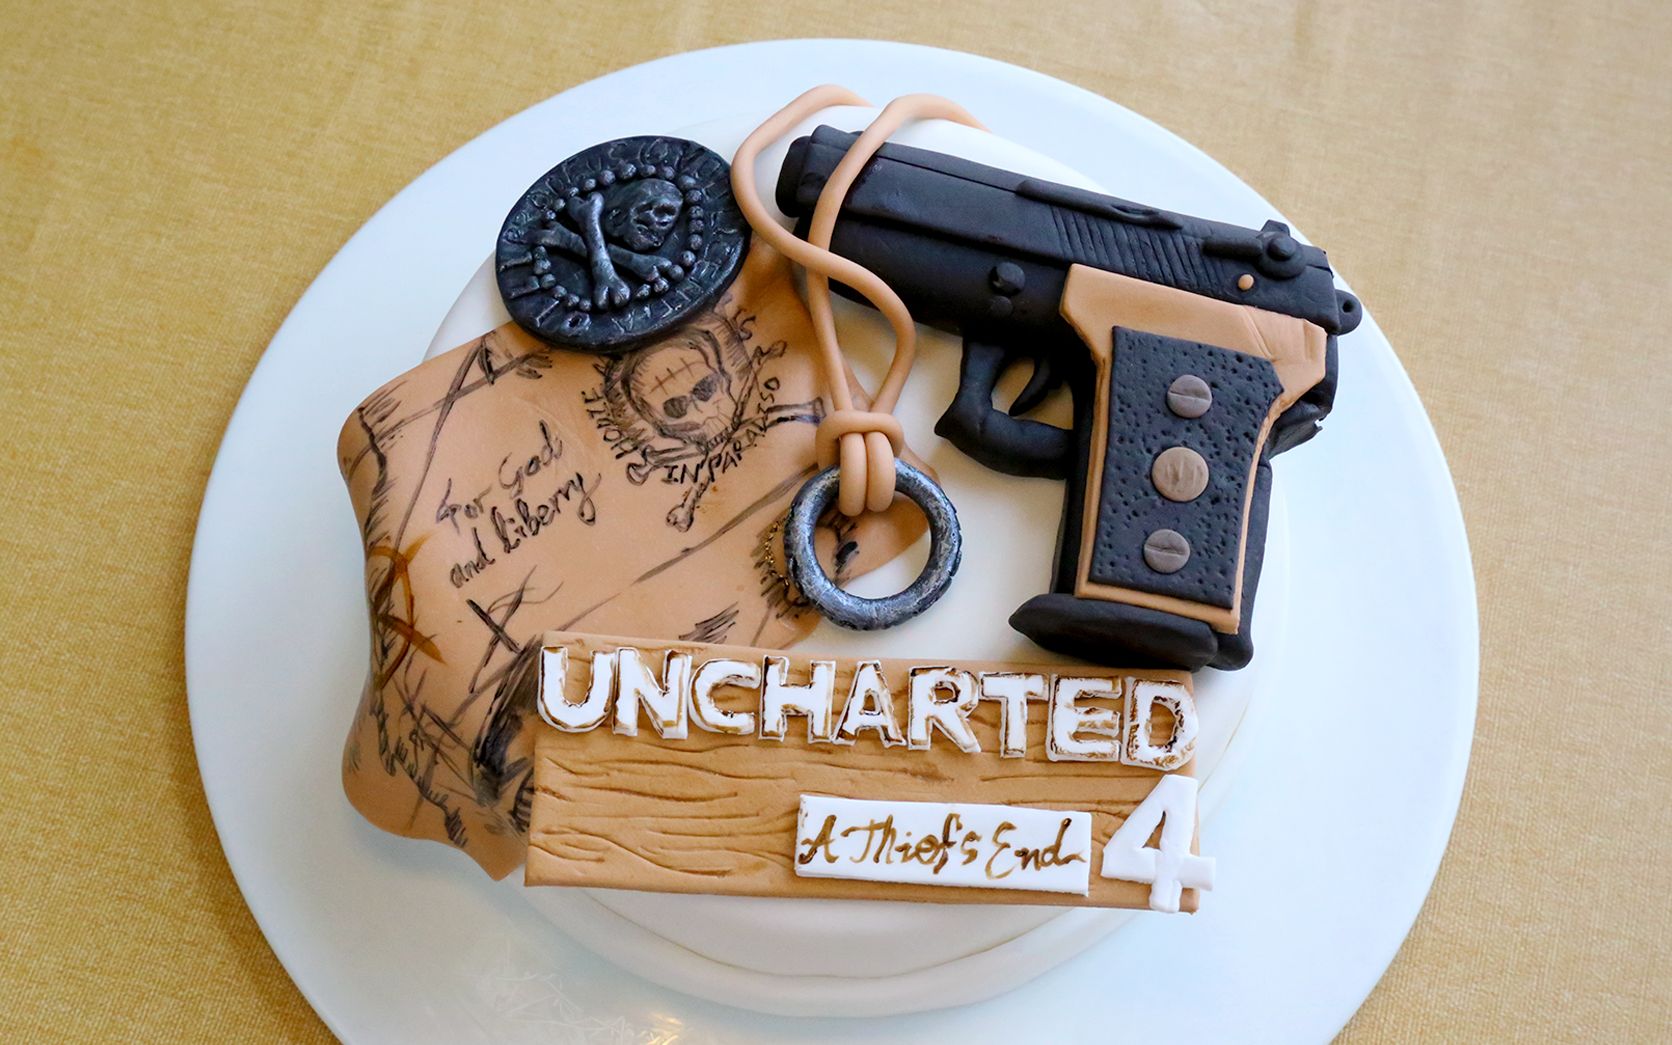 Food]How to Make Uncharted 4 Fondant Cake - BiliBili